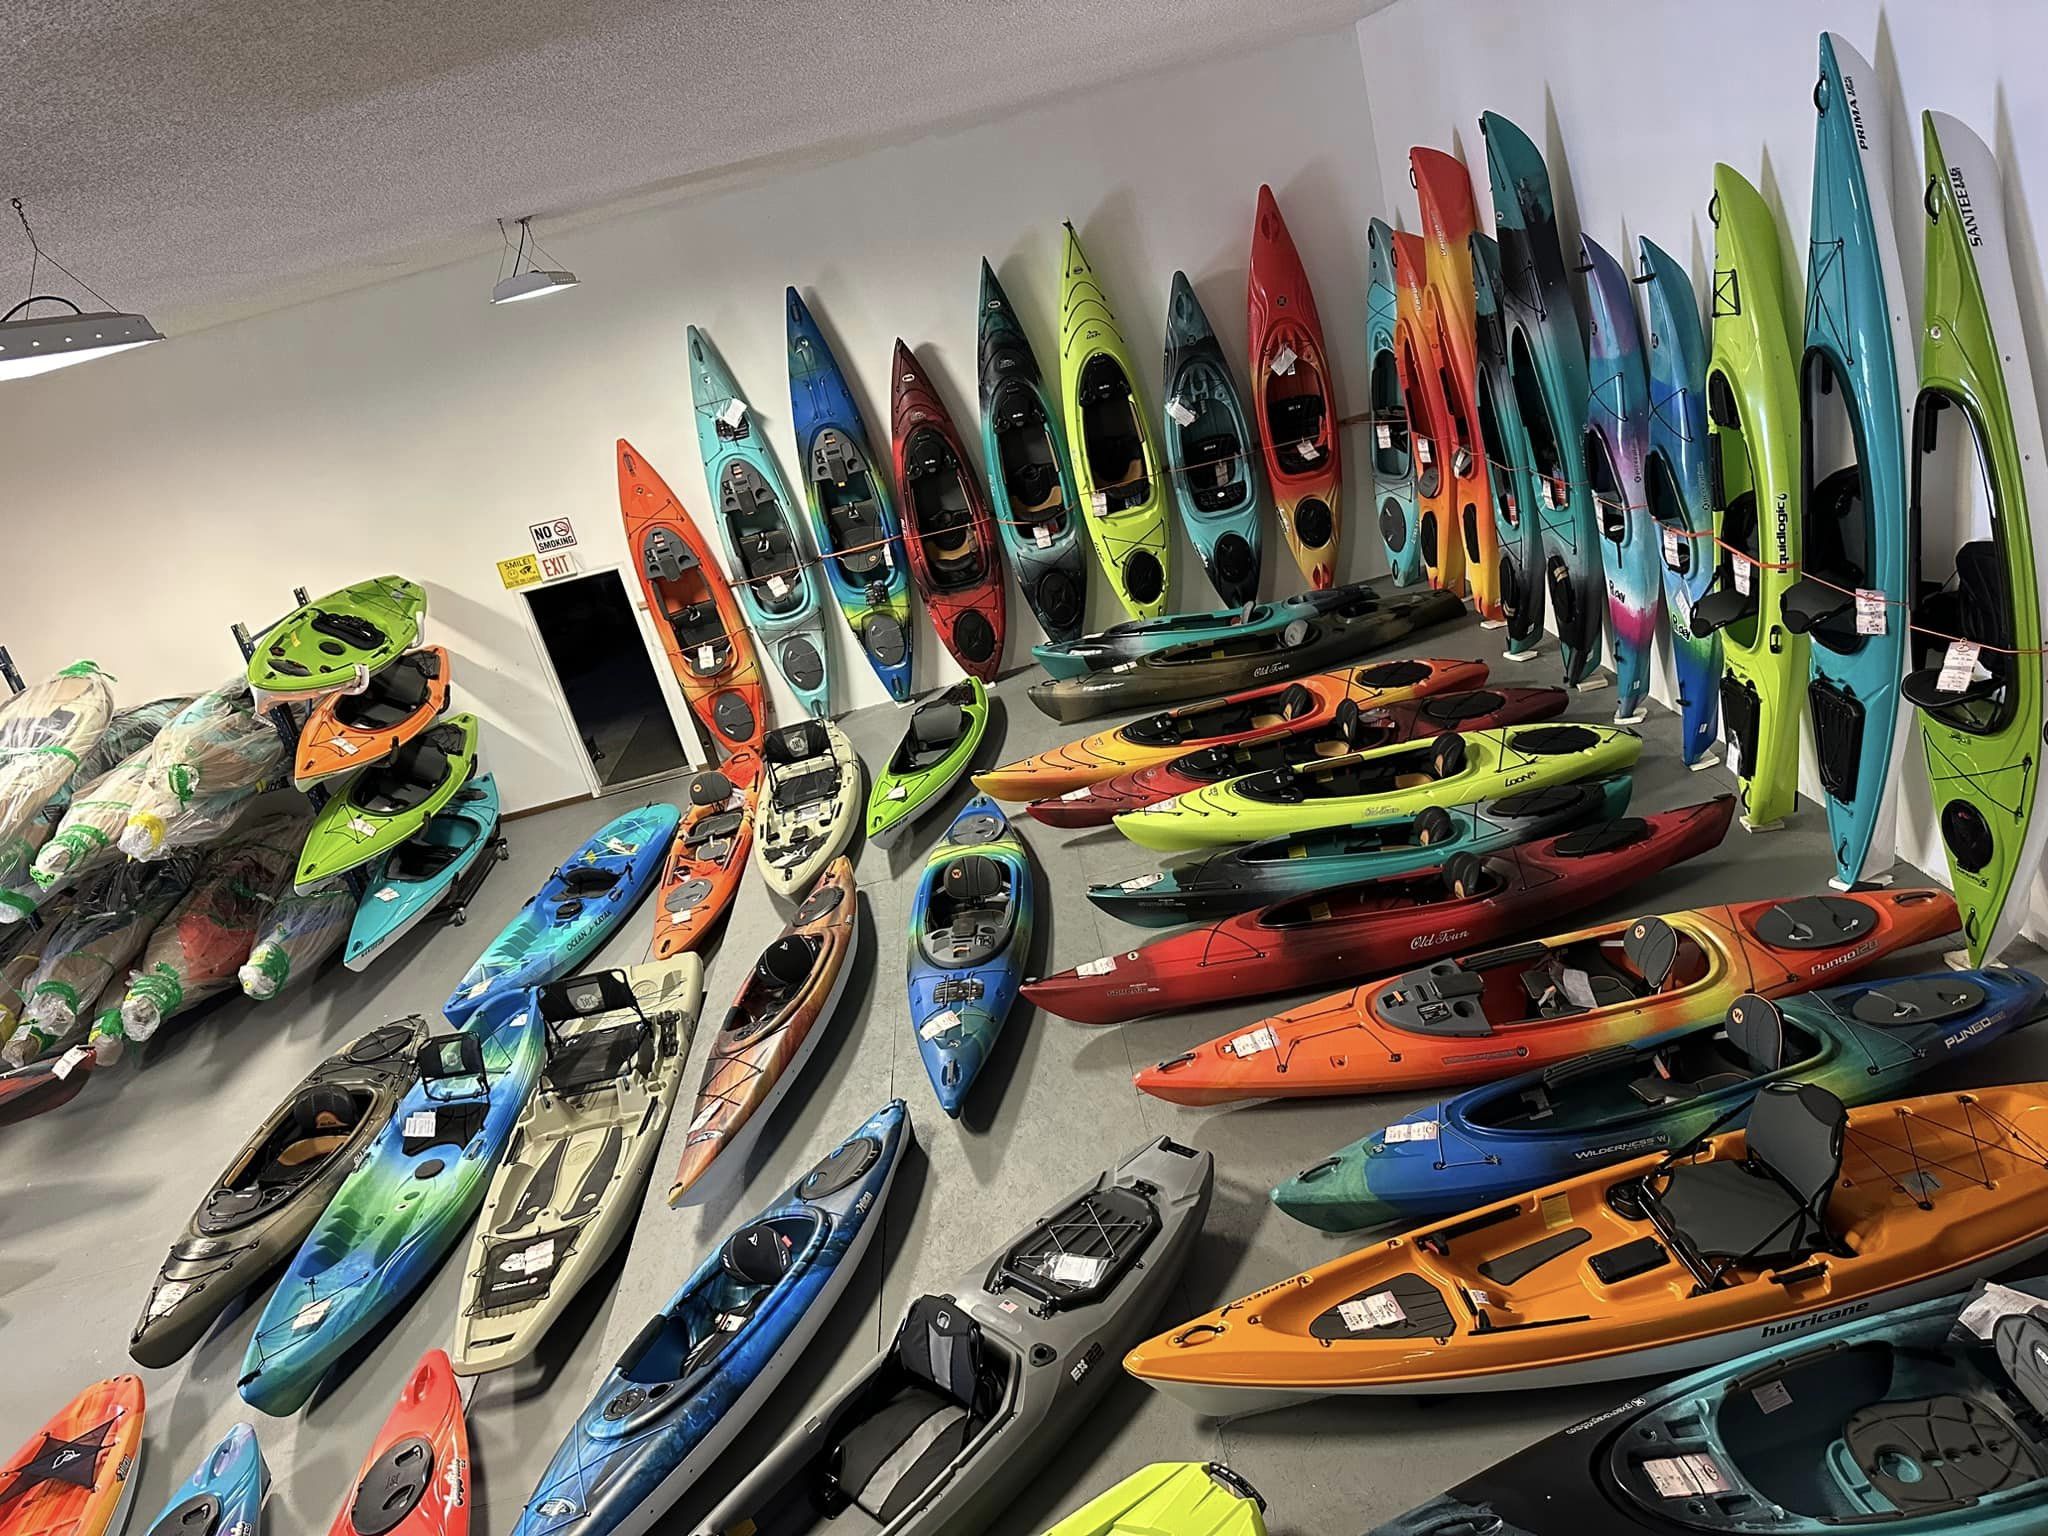 saratoga kayaks in stock